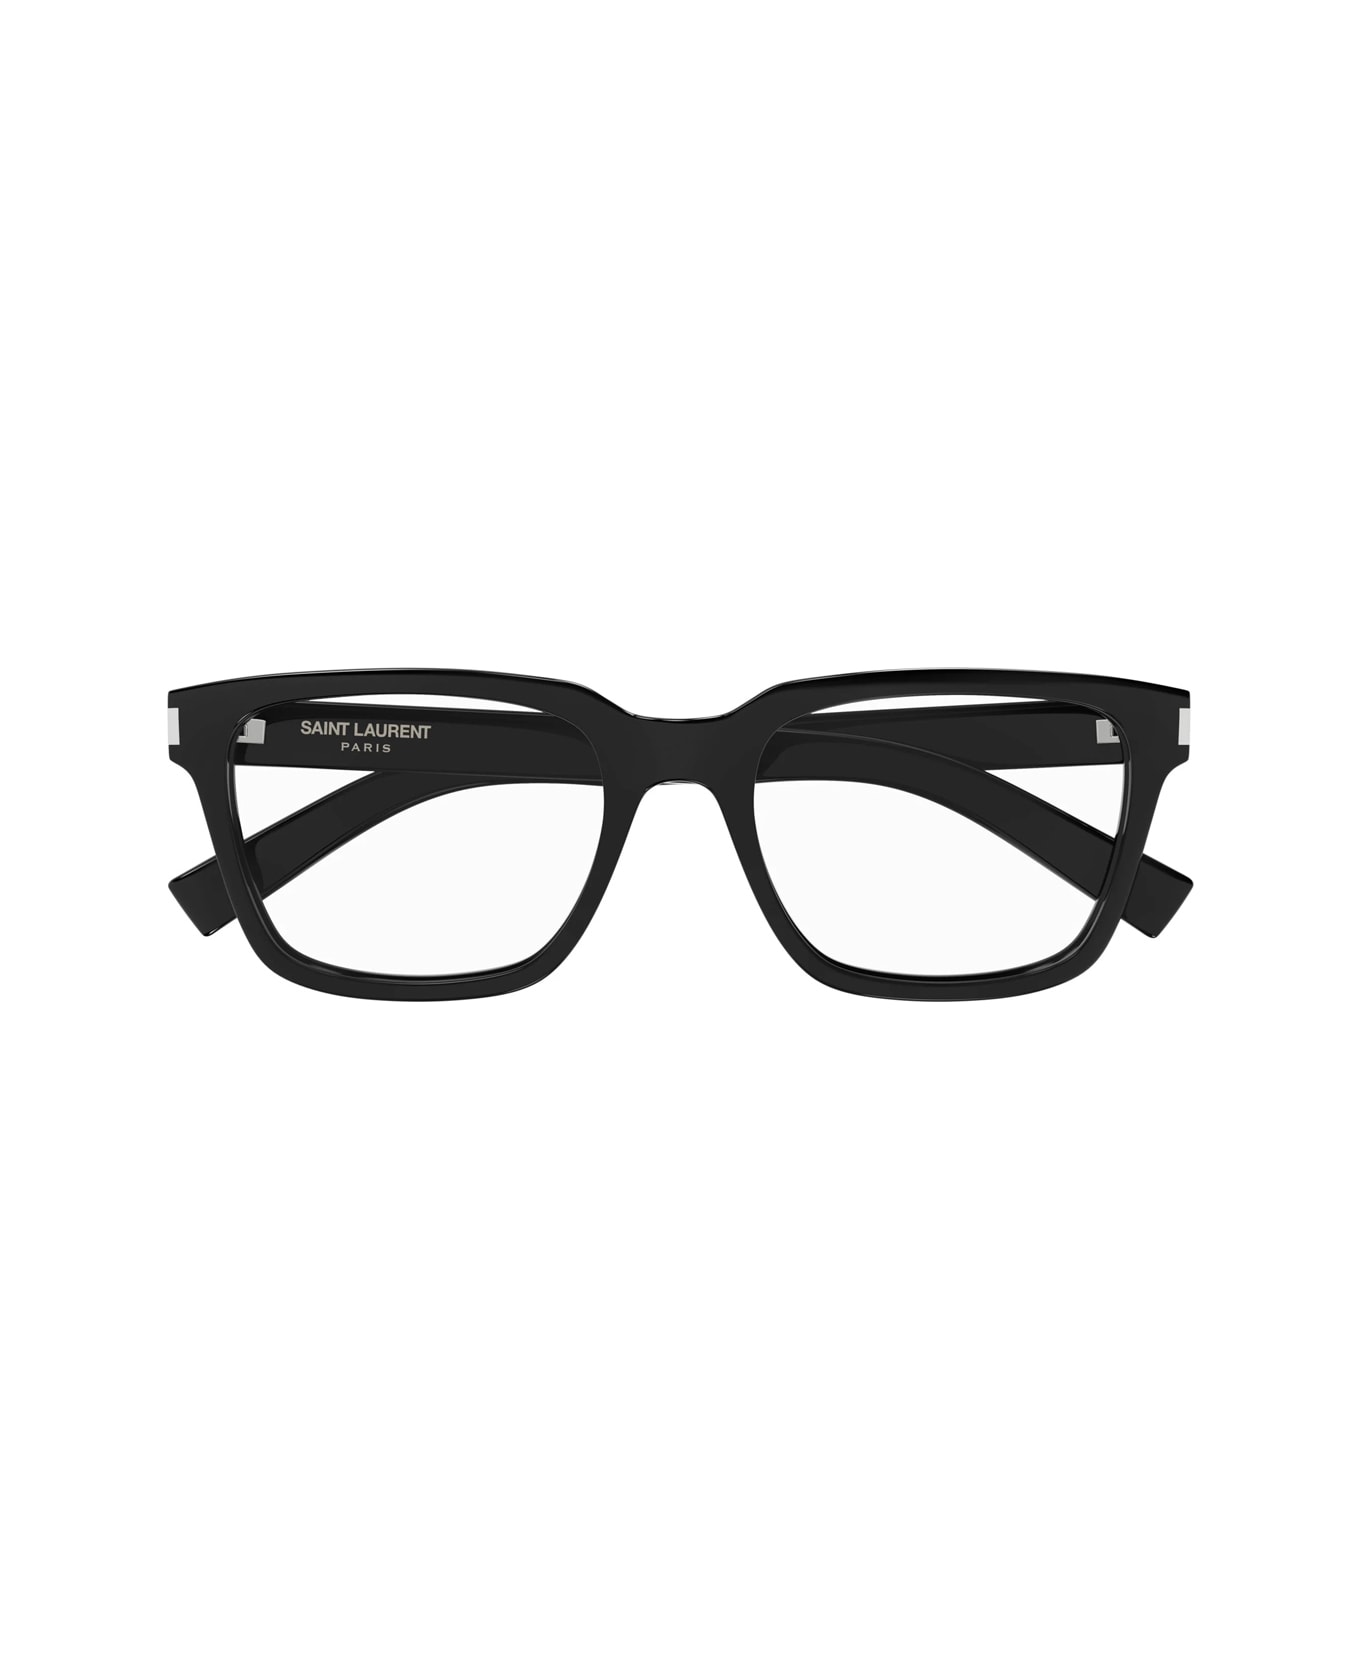 Saint Laurent Eyewear Sl 621 001 Glasses - Nero アイウェア